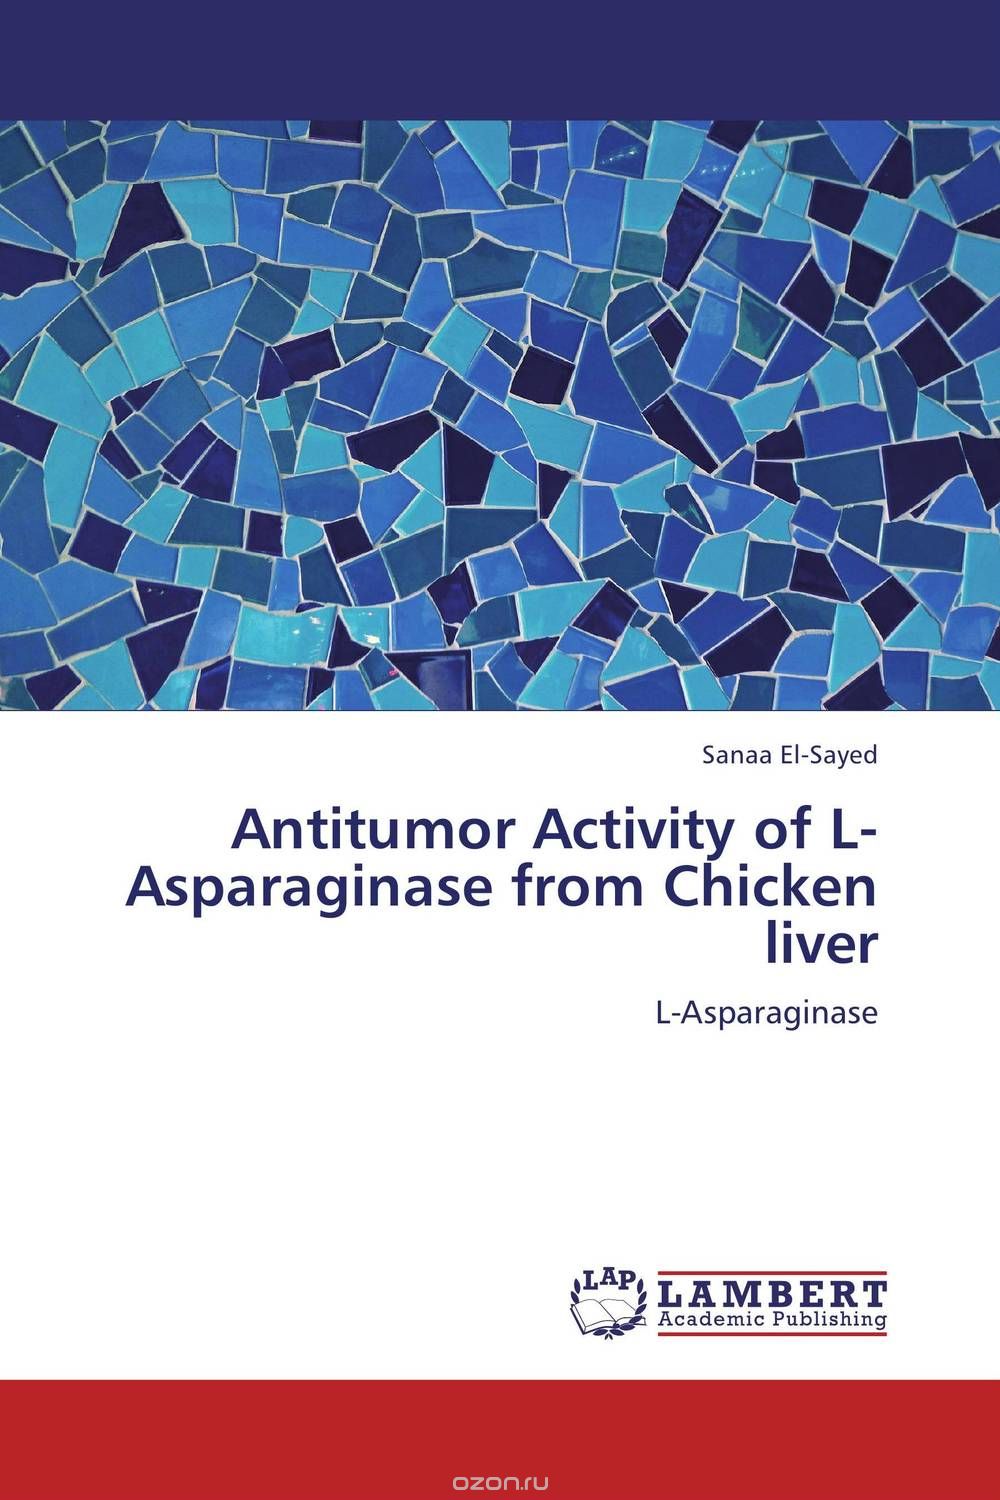 Скачать книгу "Antitumor Activity of L-Asparaginase from Chicken liver"